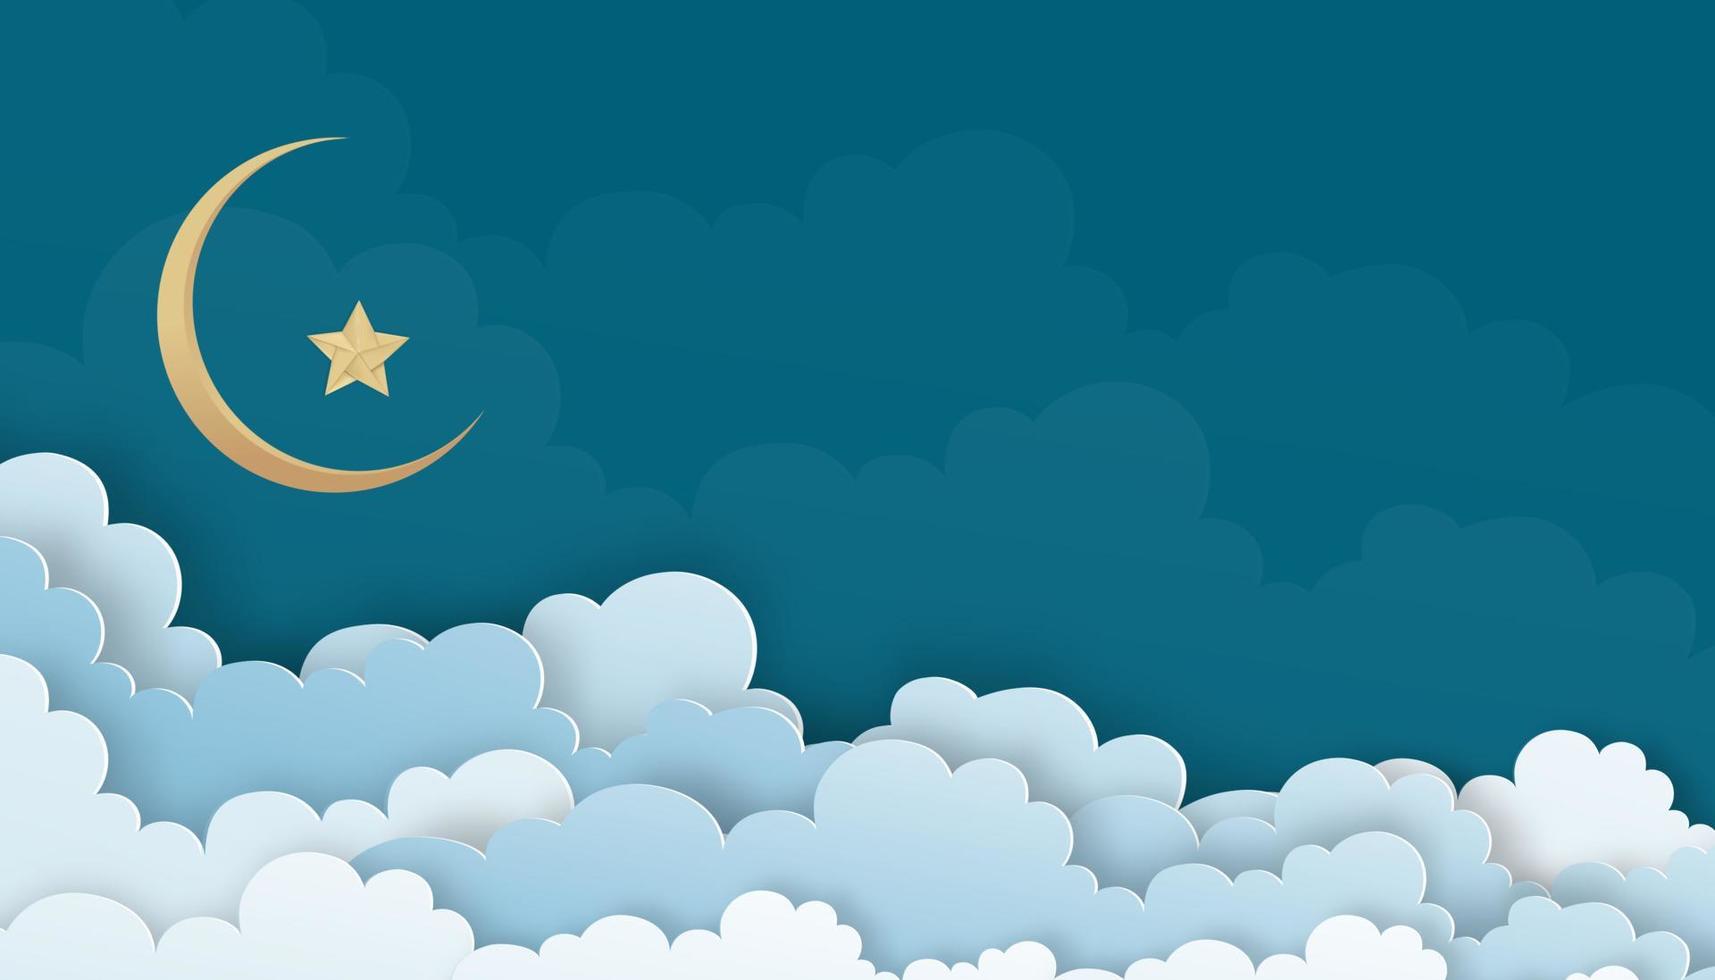 Blue Sky with cloud and Crescent moon and star, Vector illustration Cloudscape layers 3D paper cut ,Nature background banner for Islamic religion,Eid al-Adha, Eid Mubarak, Eid al fitr, Ramadan Kareem